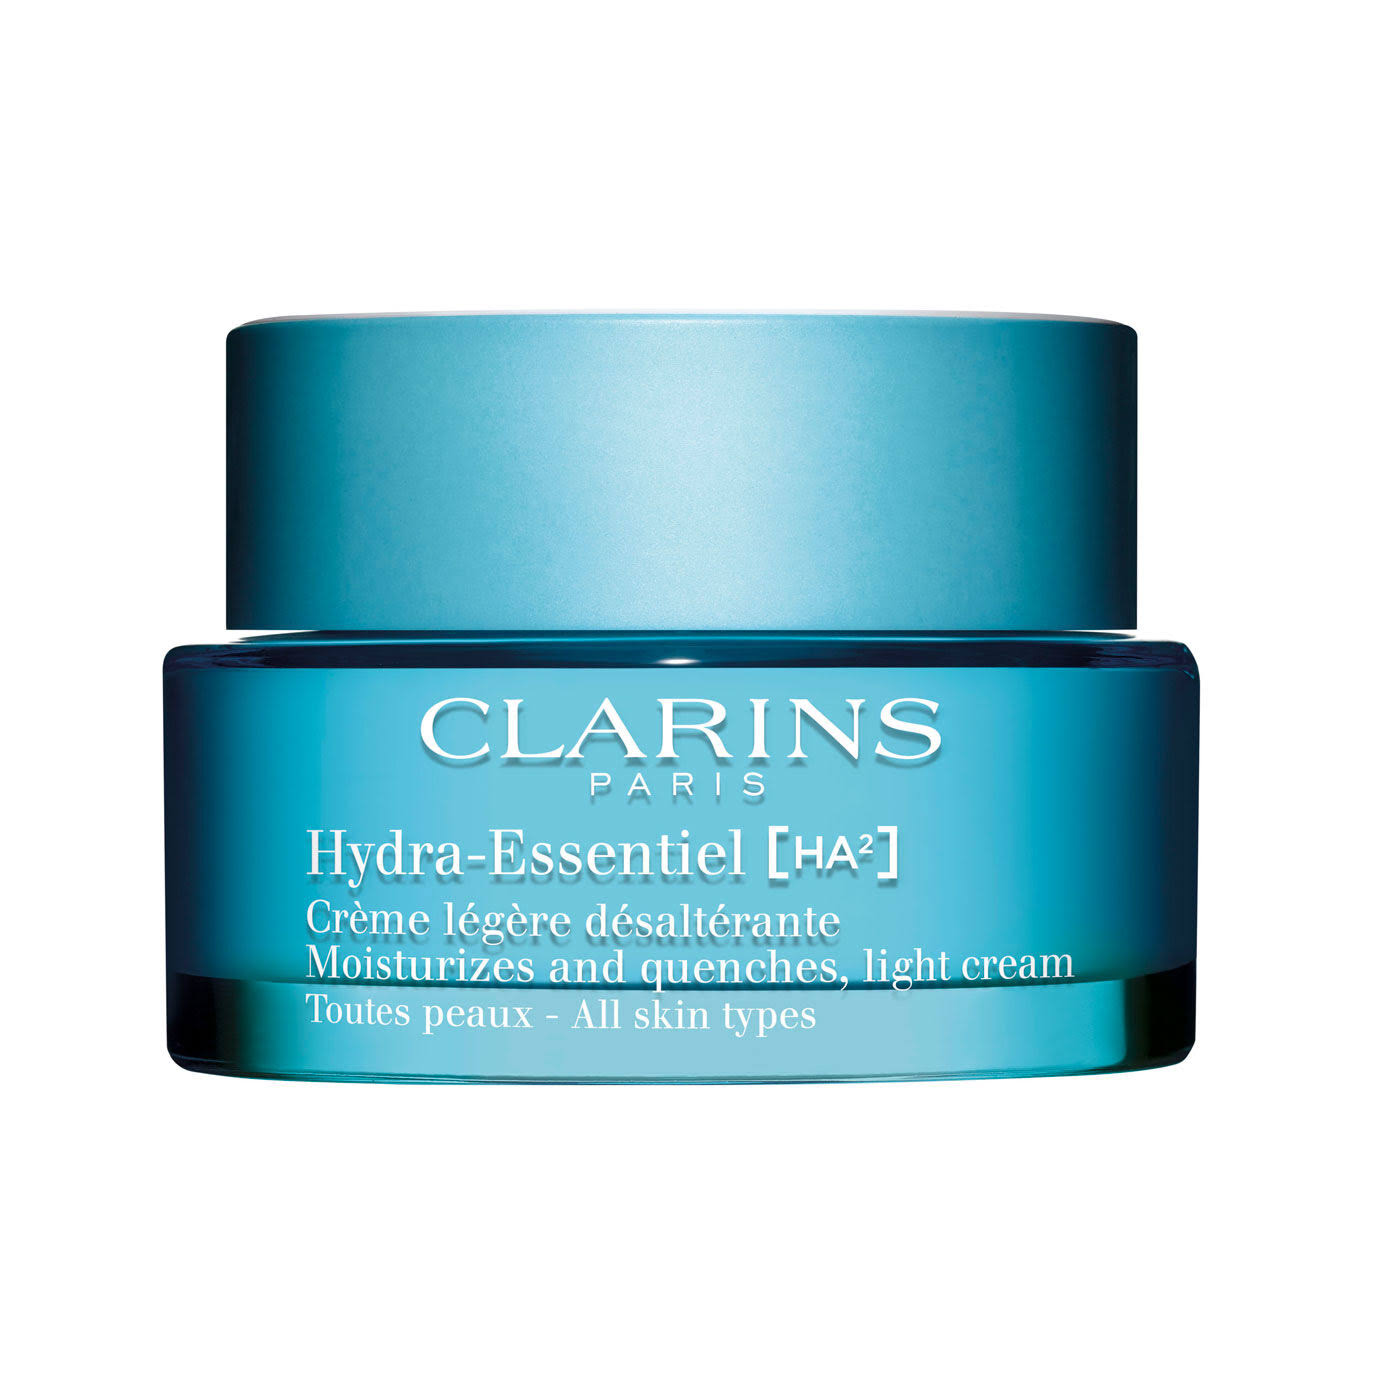 Clarins Hydra-Essentiel HA2 Light Cream 50ml